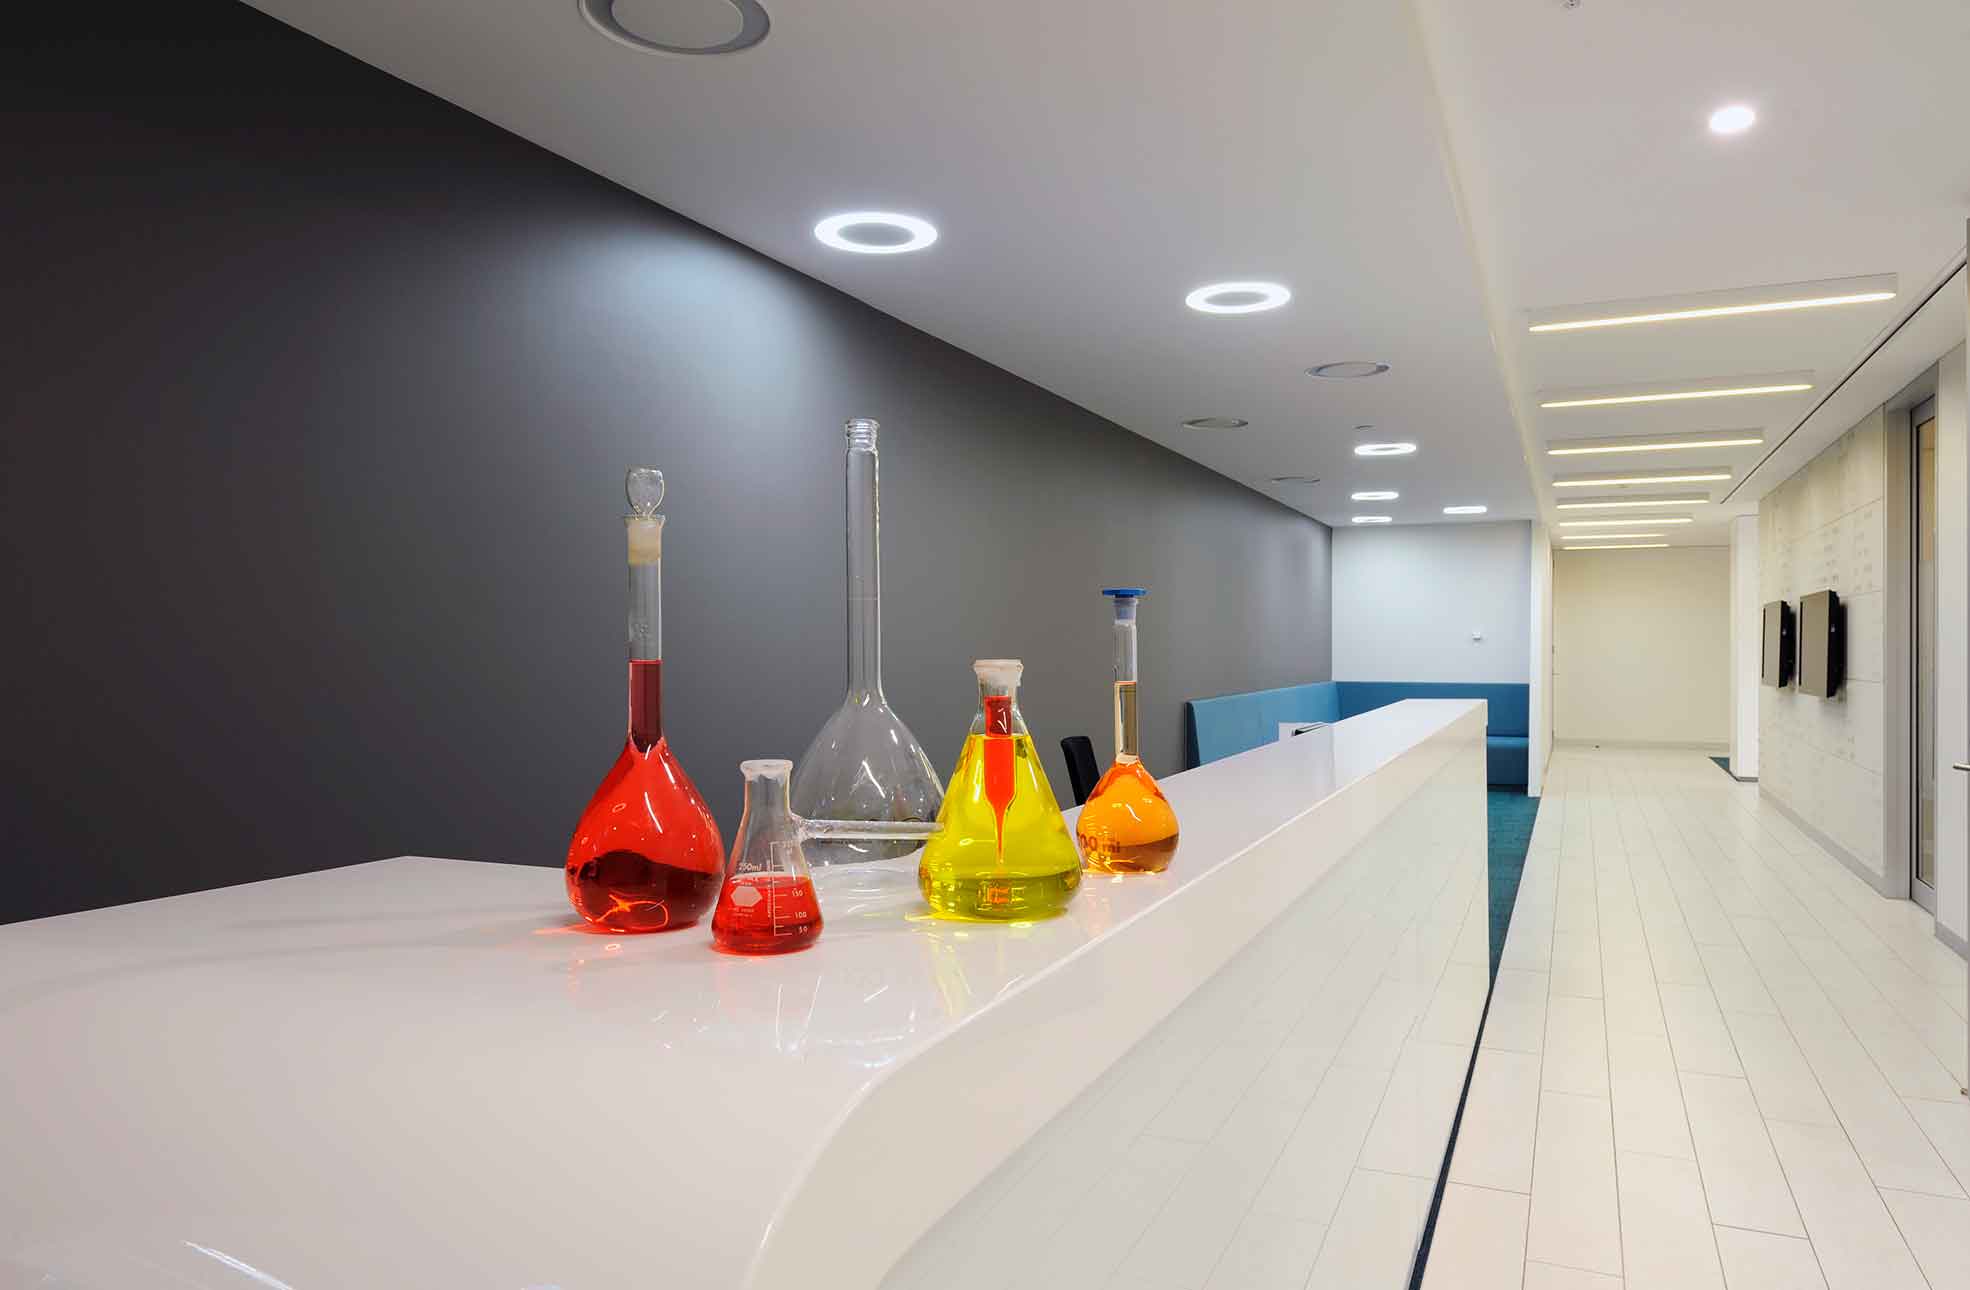 Interior fitout reception desk with laboratory flasks, beakers & coloured liquids inside